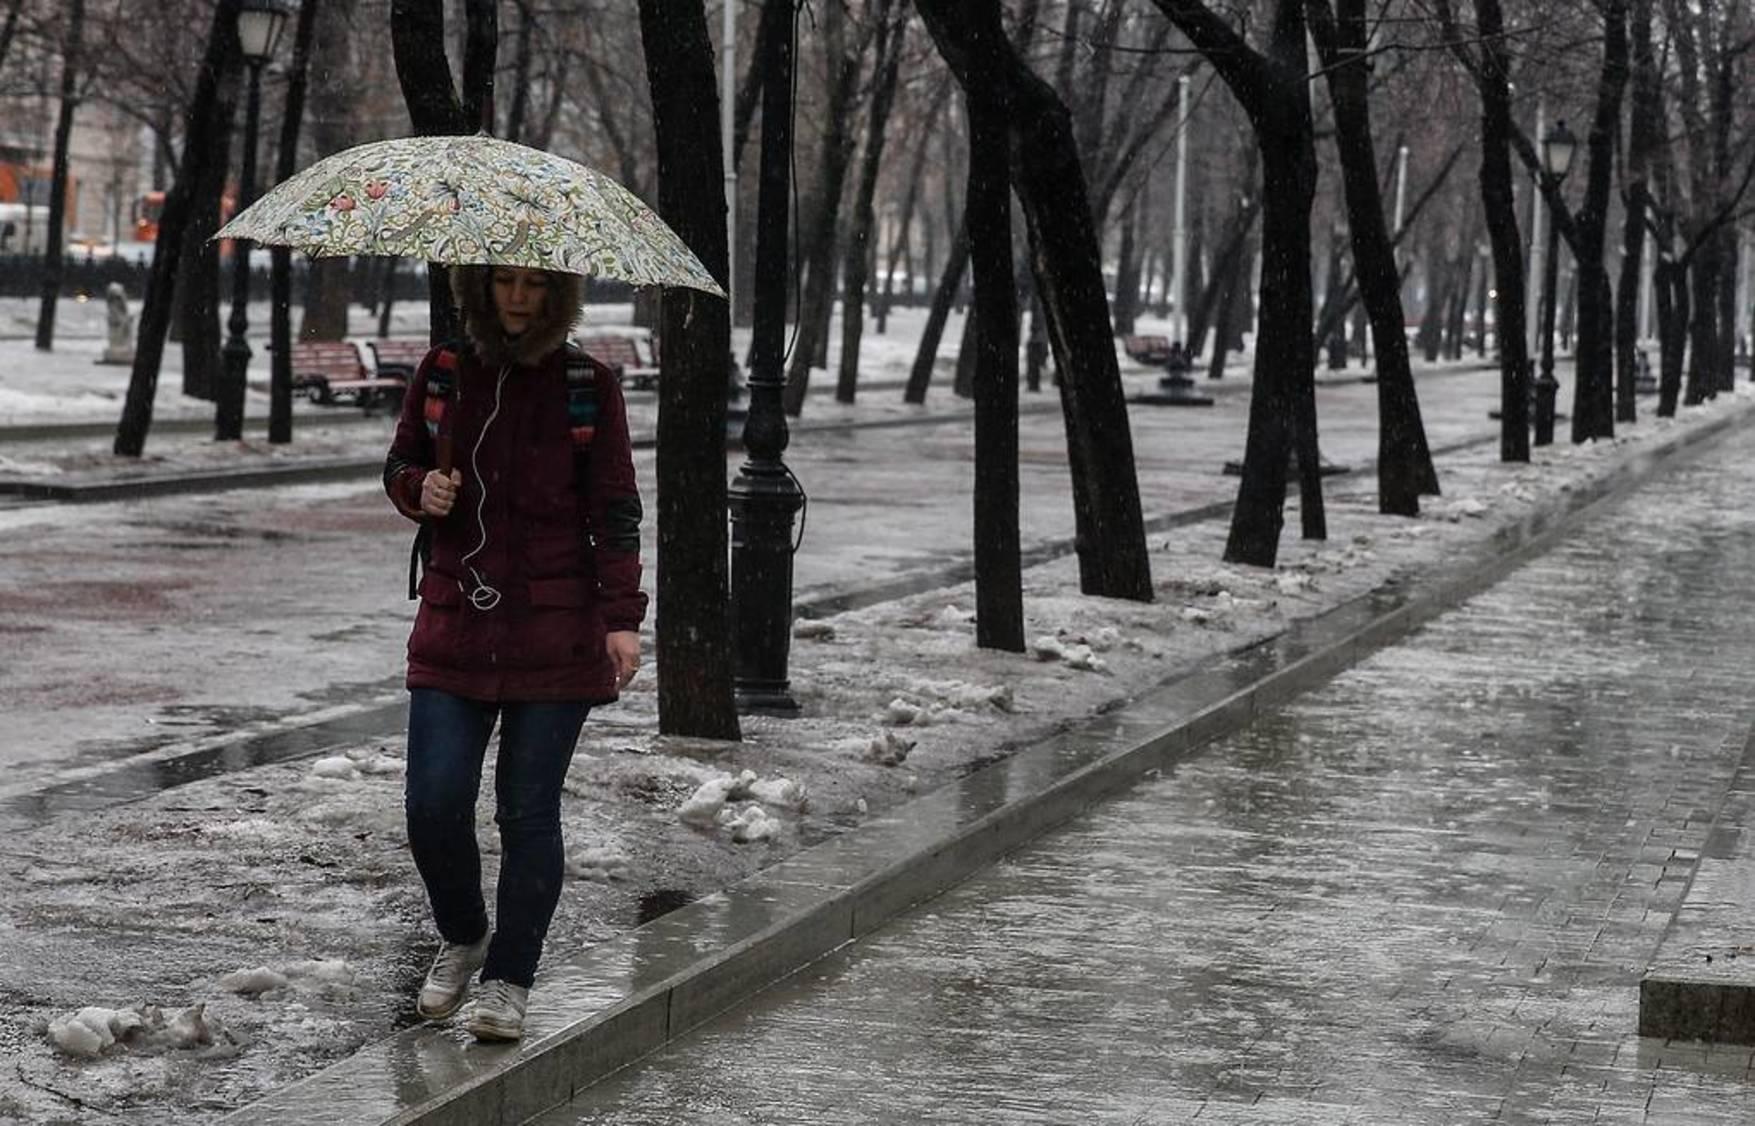 Москва теплая зима. Дождь зимой. Теплая зима. Бесснежная зима в Москве. Москва зимой пасмурно.